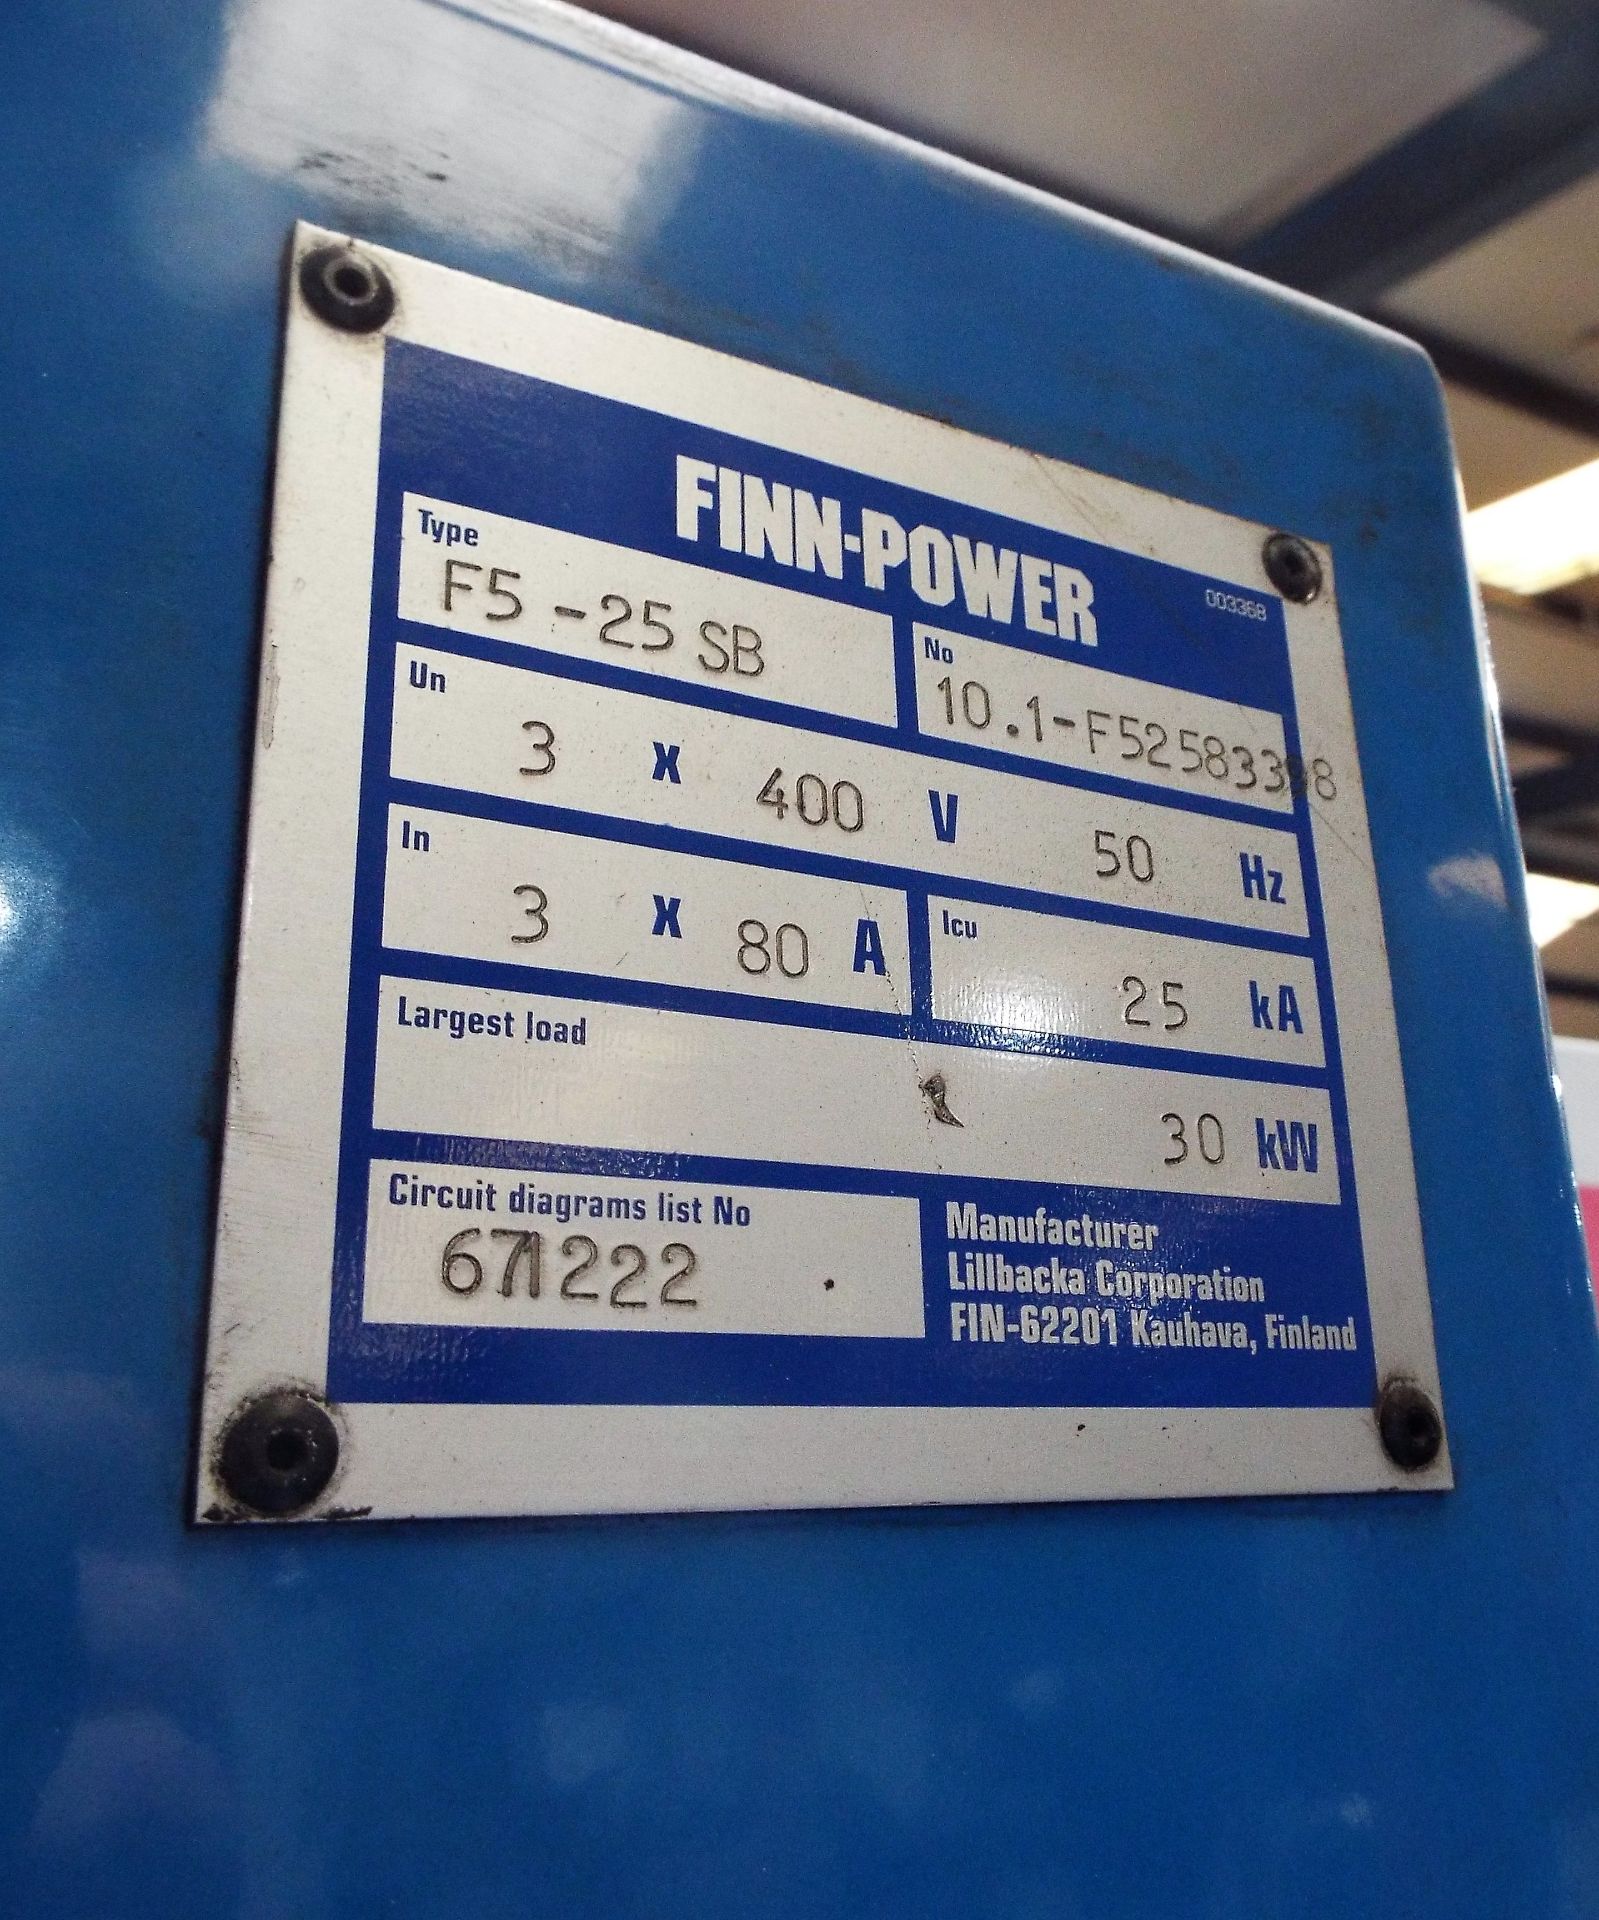 Finn Power F5-25 SB Punch Press - Image 9 of 17